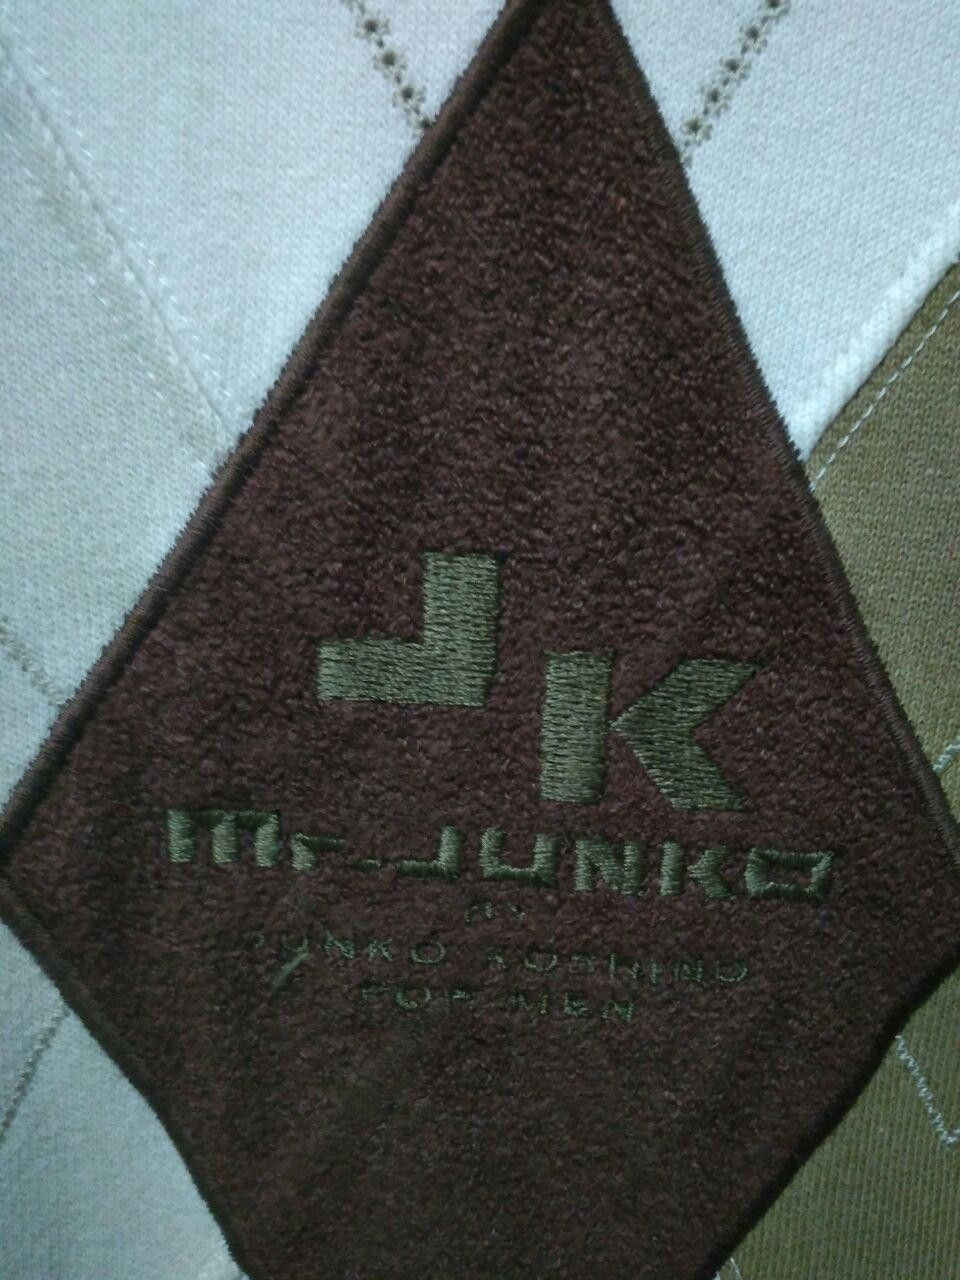 Vintage Vtg Mr Junko koshino Embroidery Sweatshirt Sweater Jumper Size US L / EU 52-54 / 3 - 4 Thumbnail